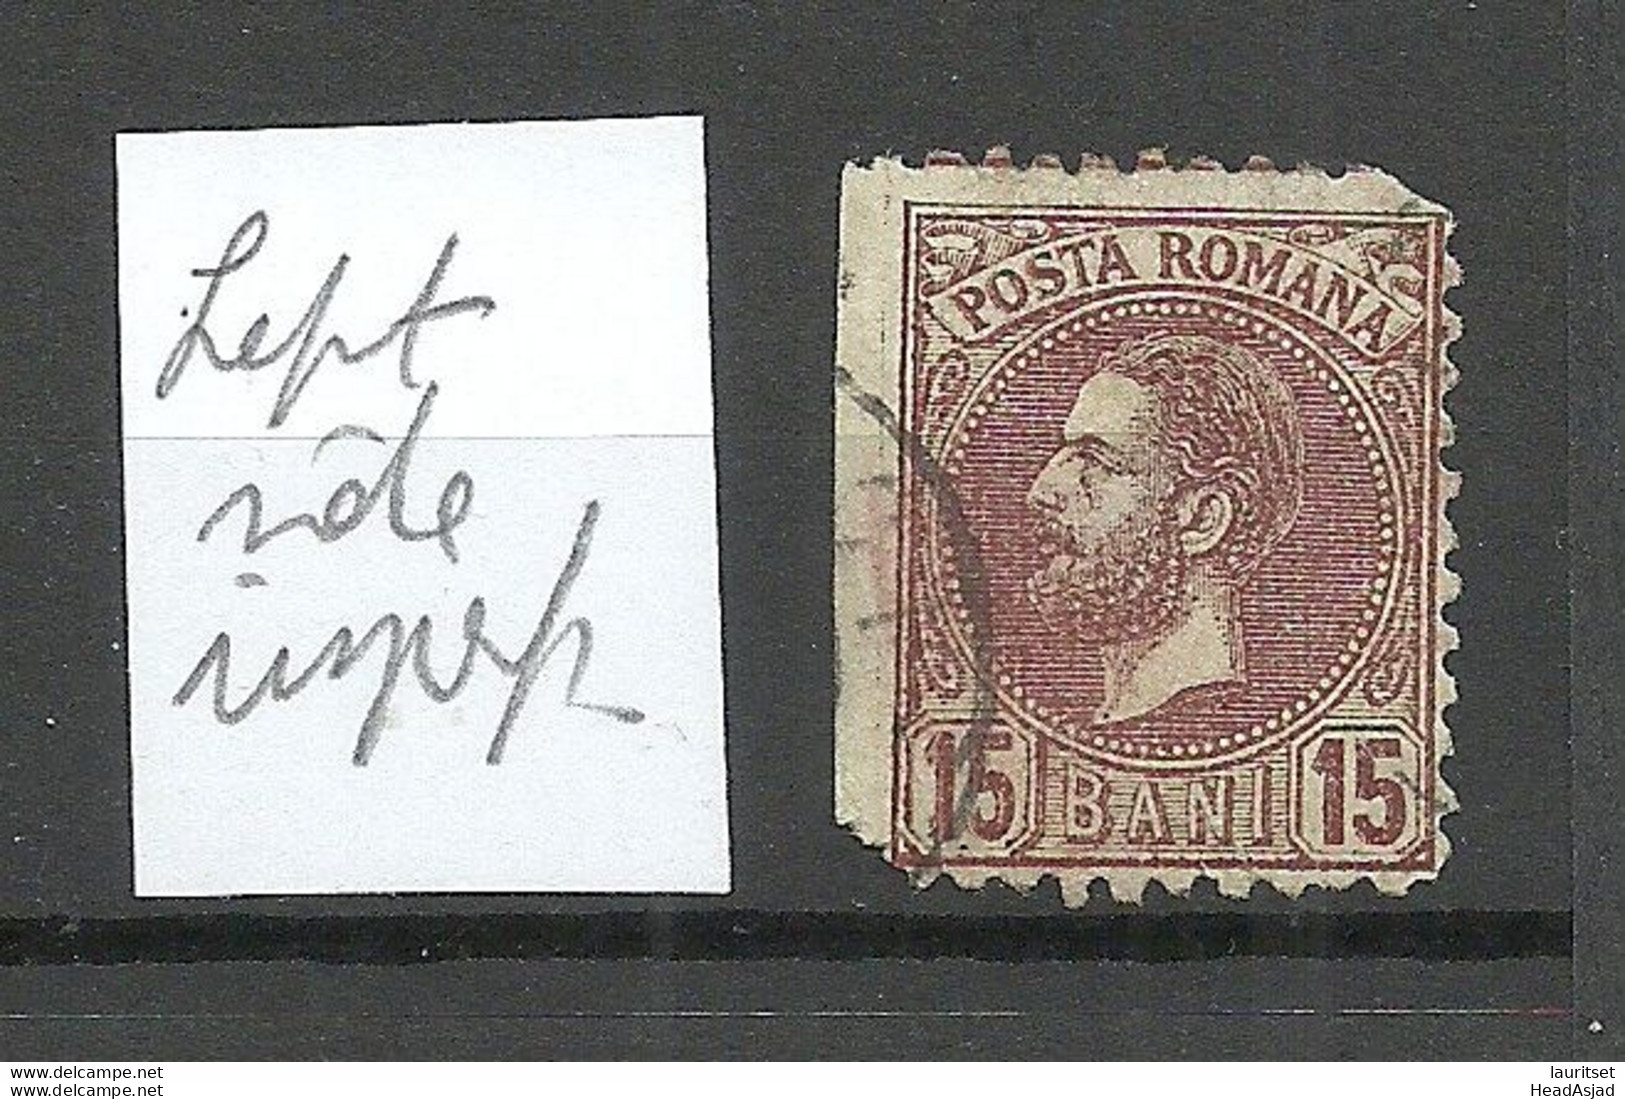 ROMANIA Rumänien 1880 Michel 55 O Variety Error = Left Side Imperforated - 1858-1880 Moldavië & Prinsdom